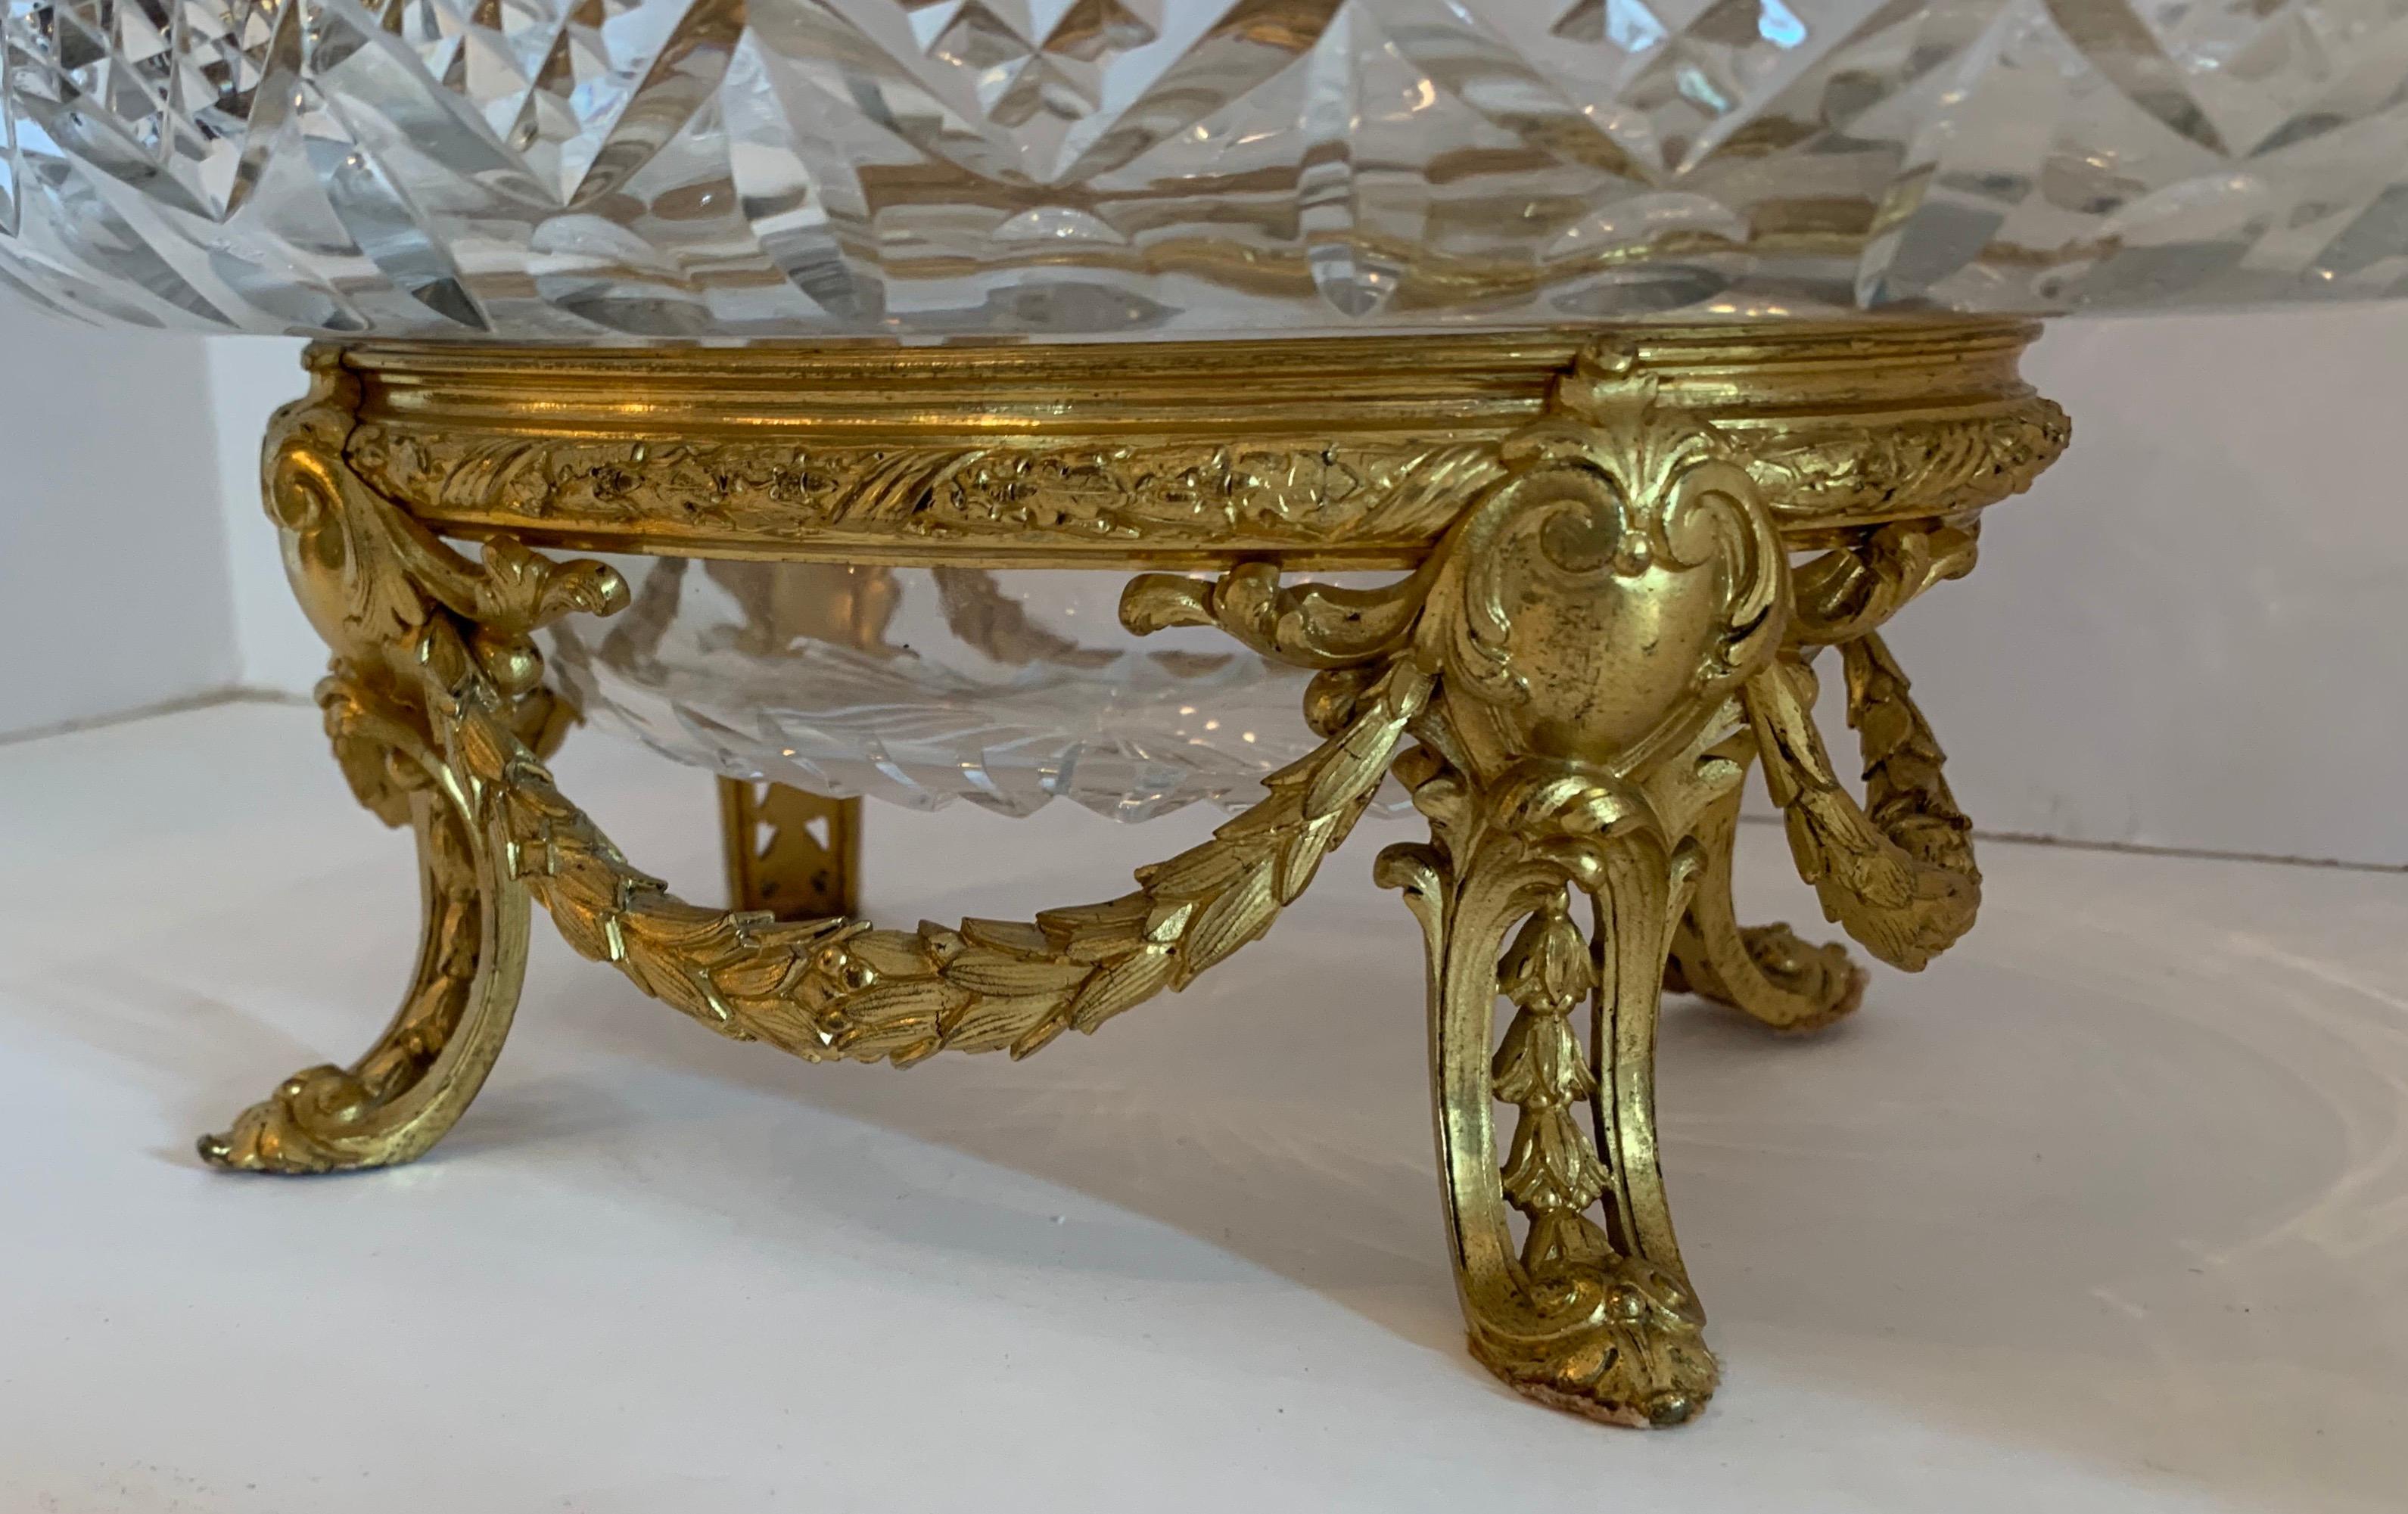 A wonderful French gilt doré bronze ormolu swag, cut crystal oval inset bowl centerpiece.